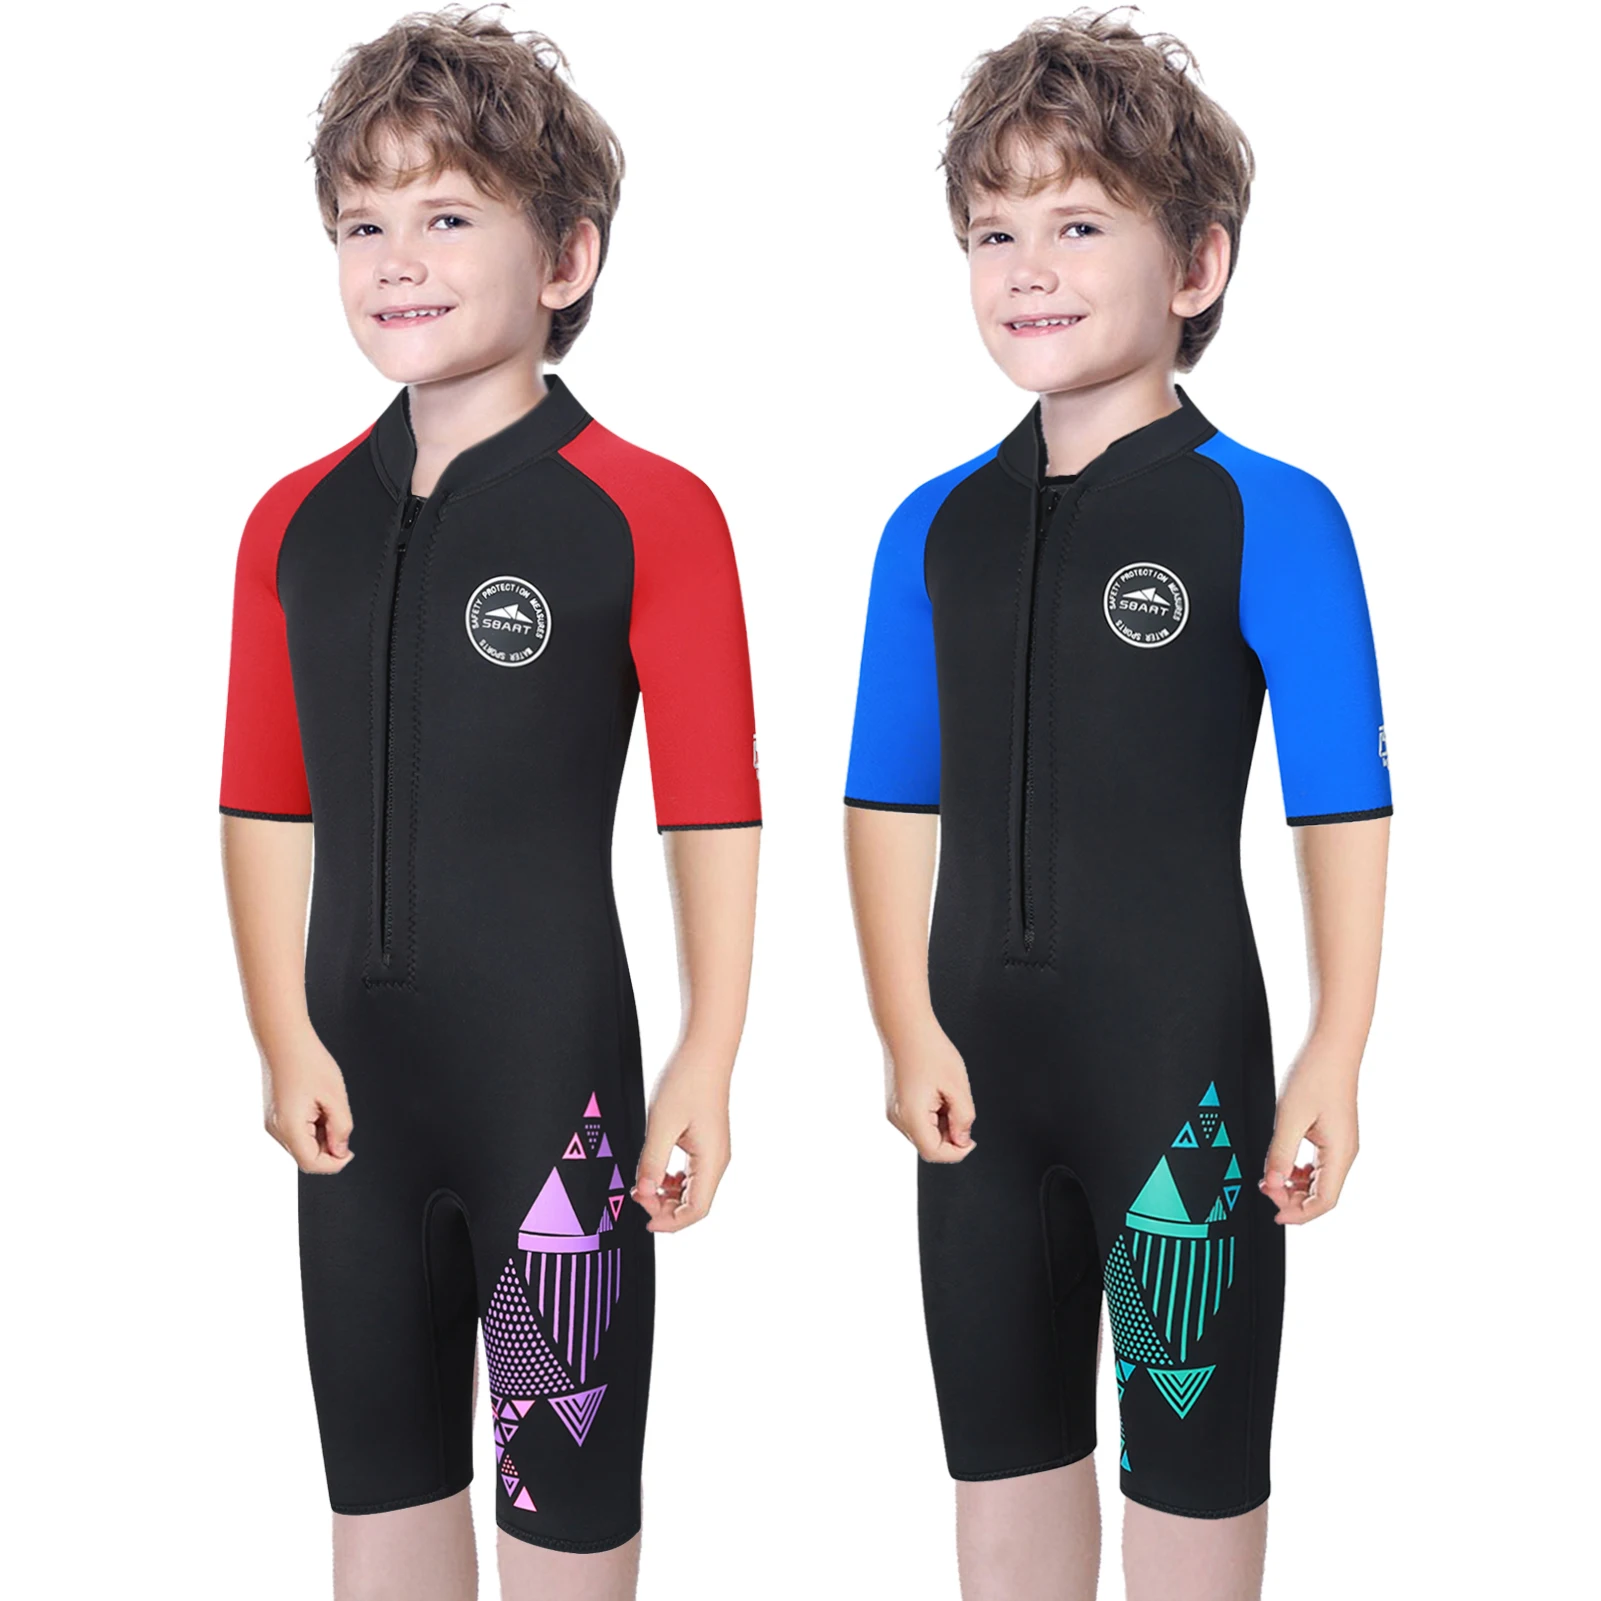 

Short Sleeve Kids Wetsuits 2mm Neoprene Children's Diving Suits for Boys Girls Swimming Rash Guard Snorkeling Surfing Wear